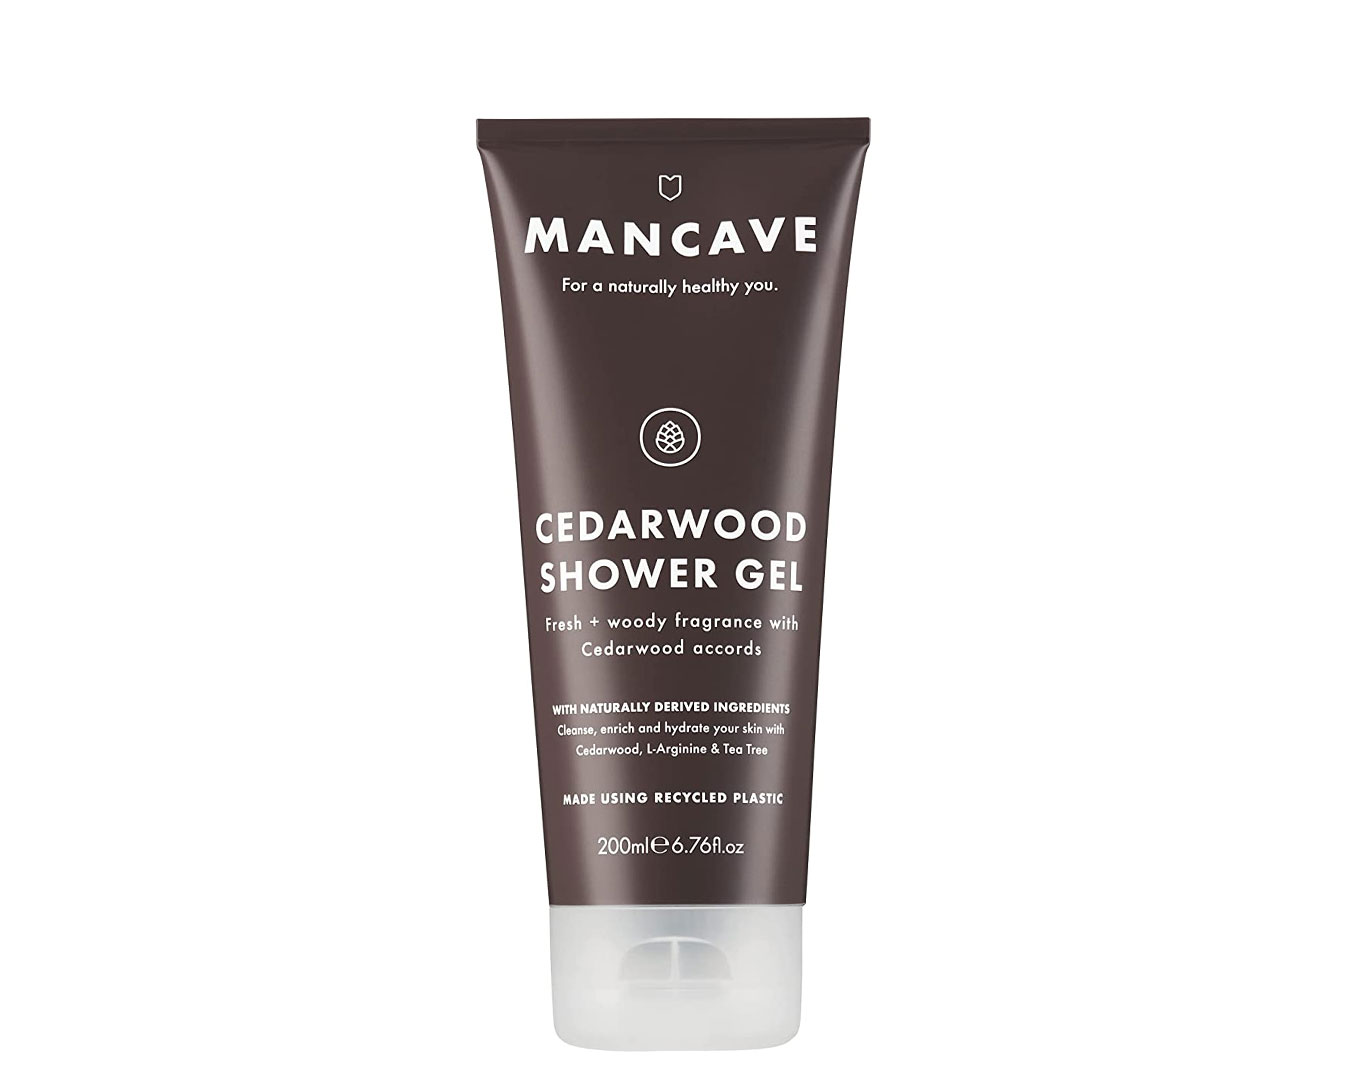 ManCave Cedarwood Shower Gel